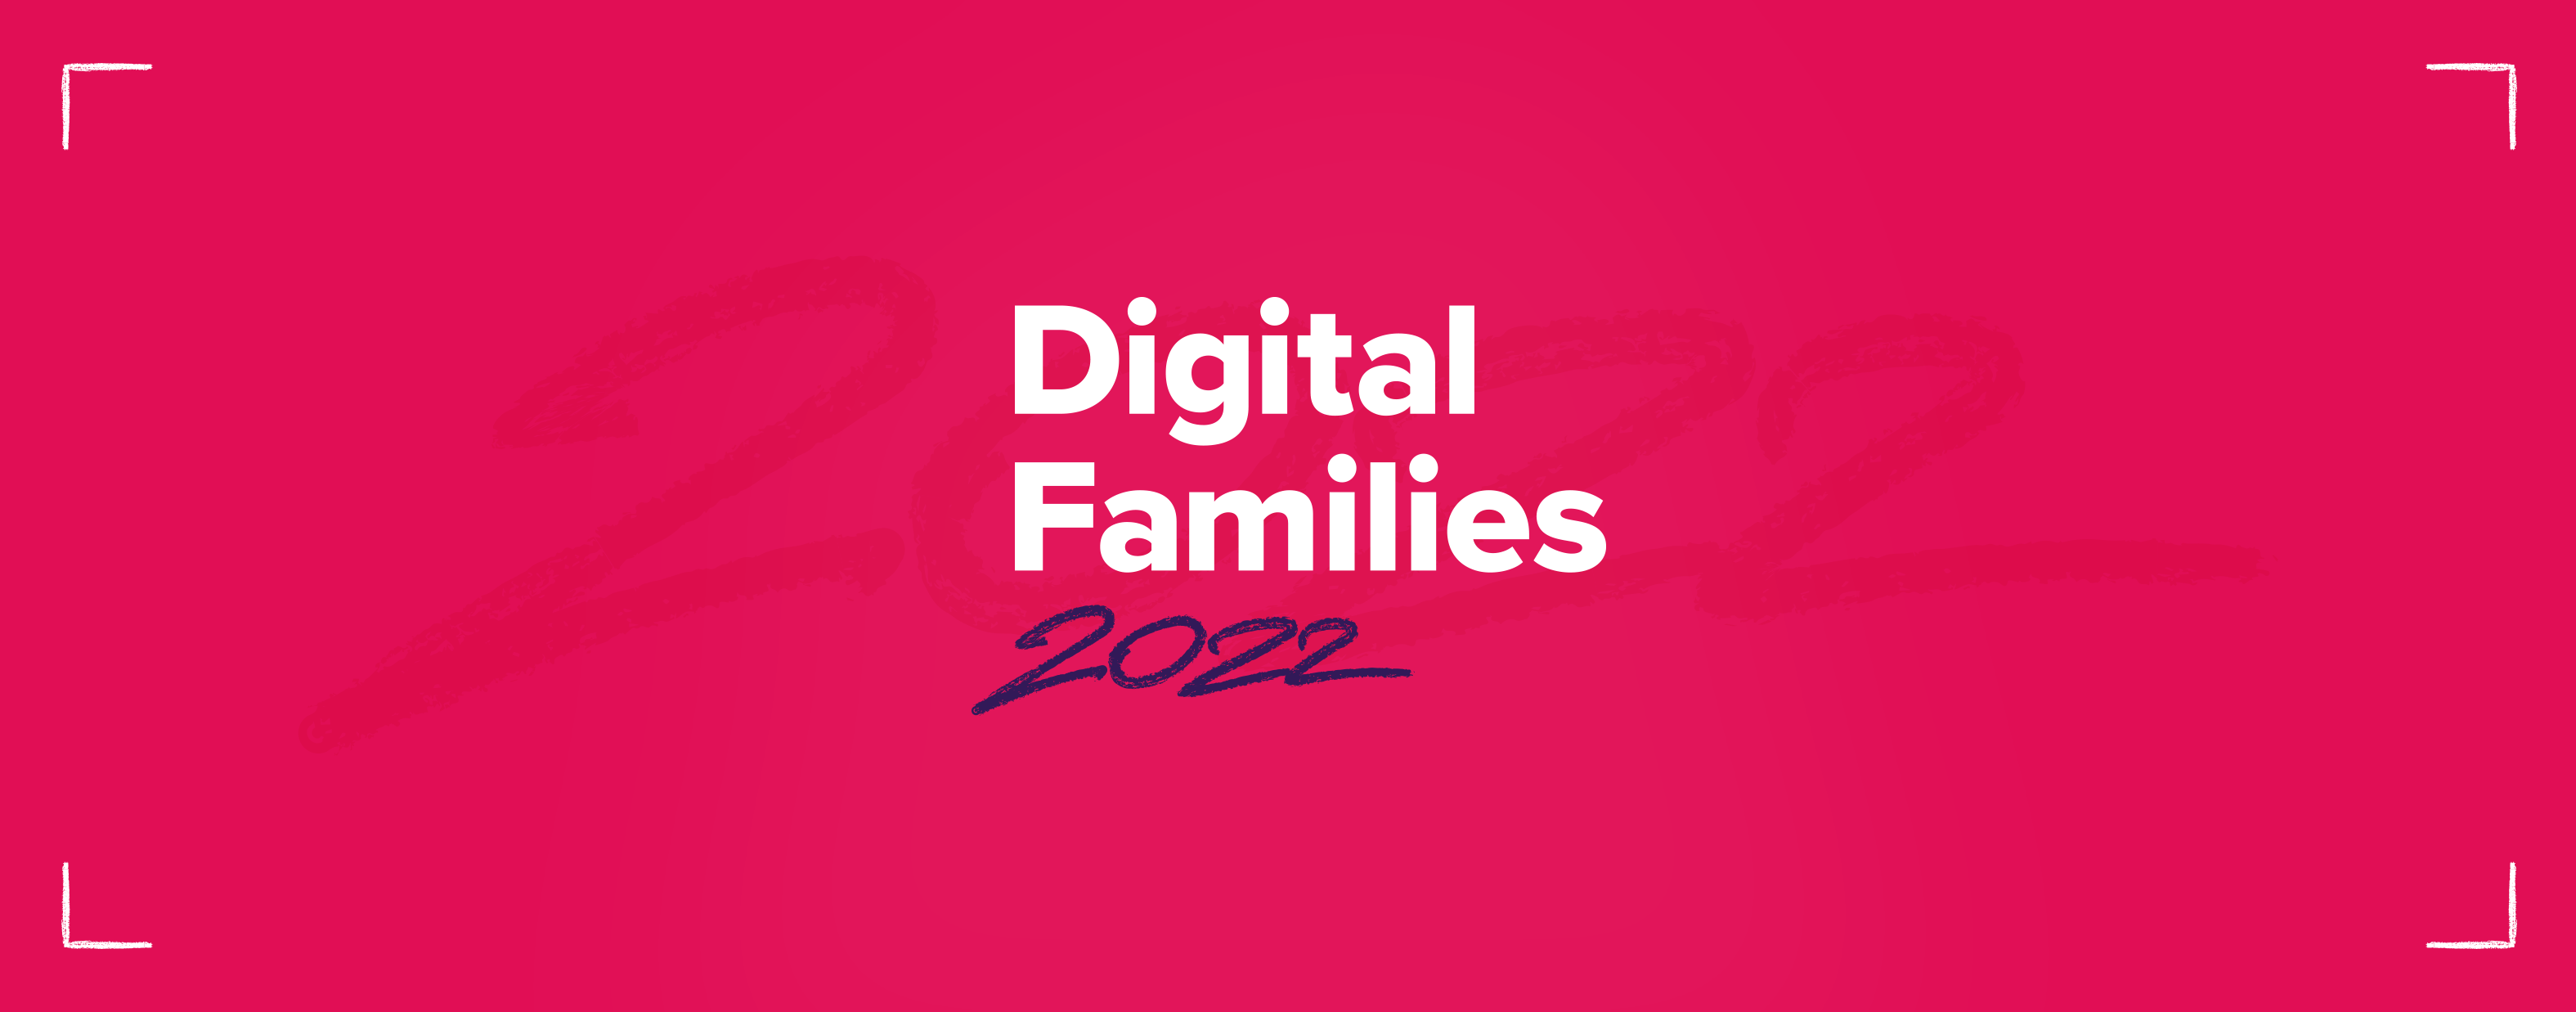 Digital Families 2022